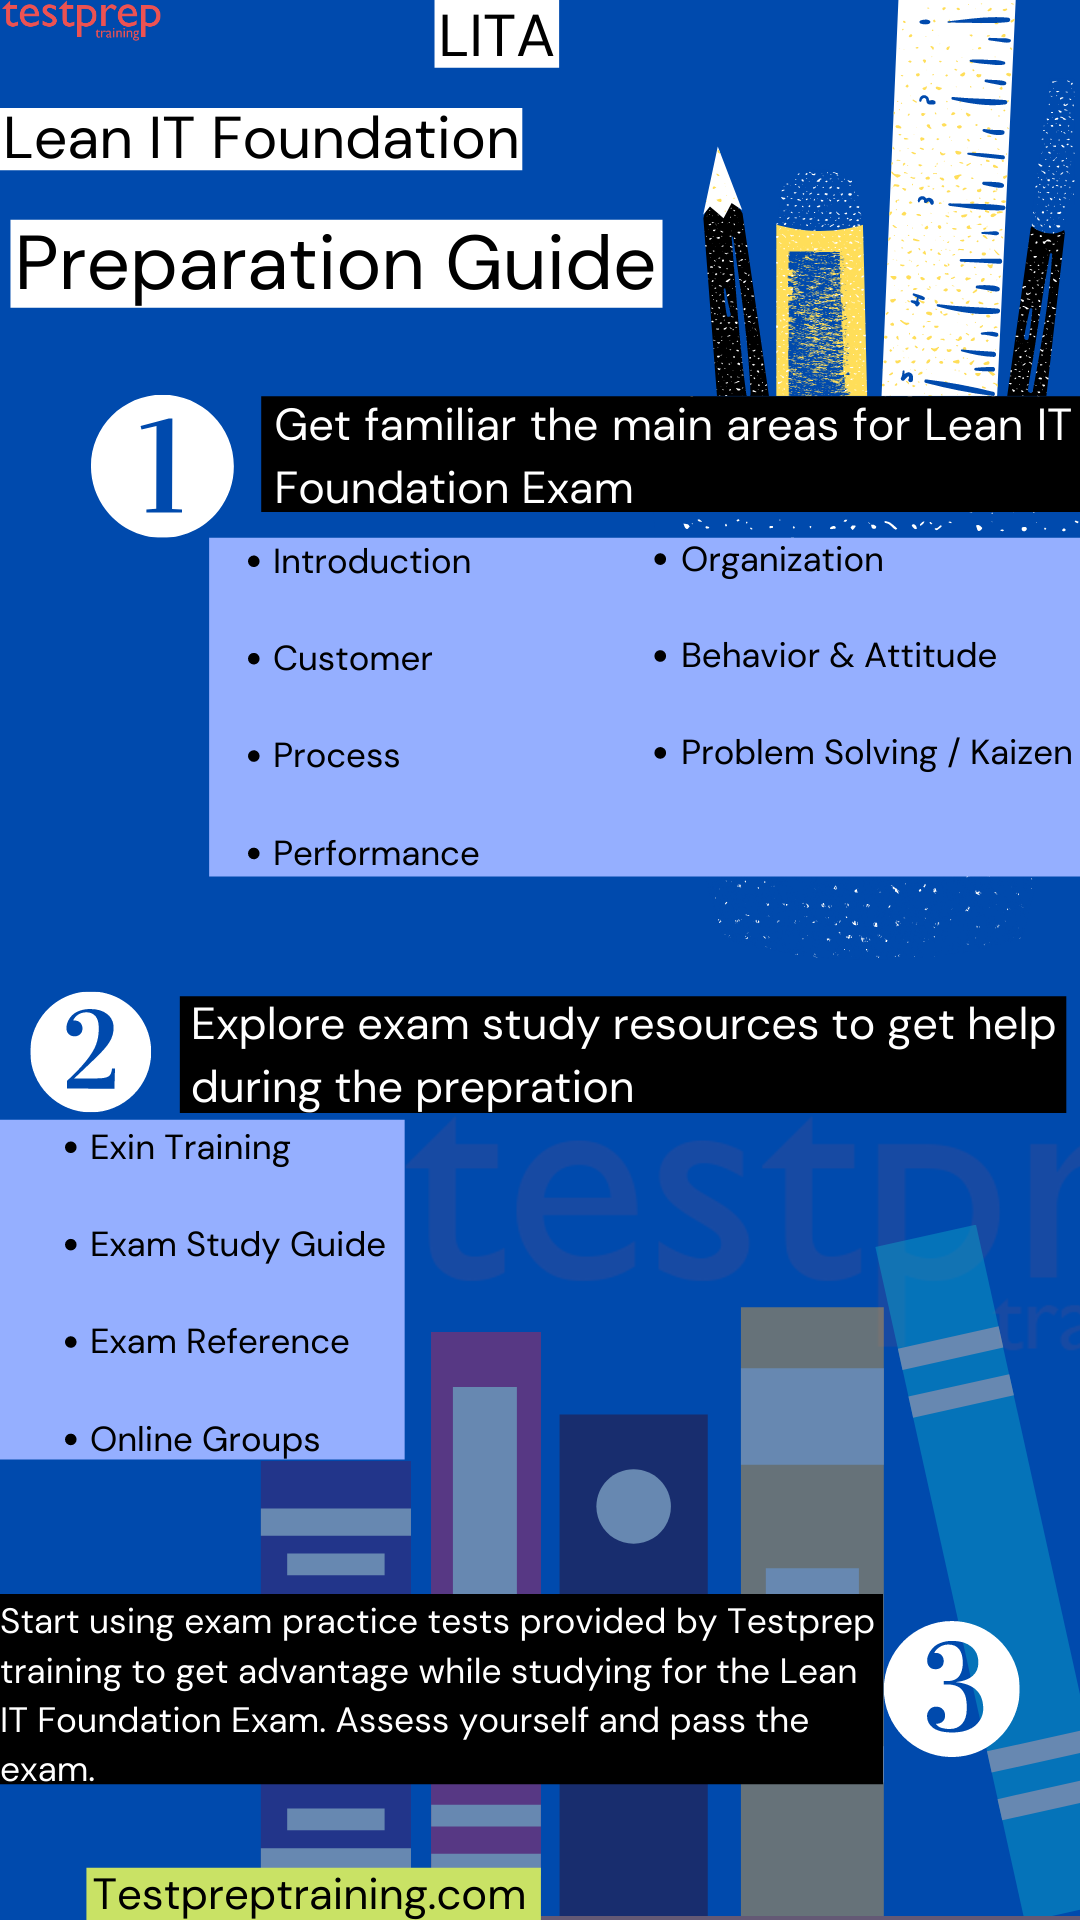 LITA Lean IT Foundation Preparation guide